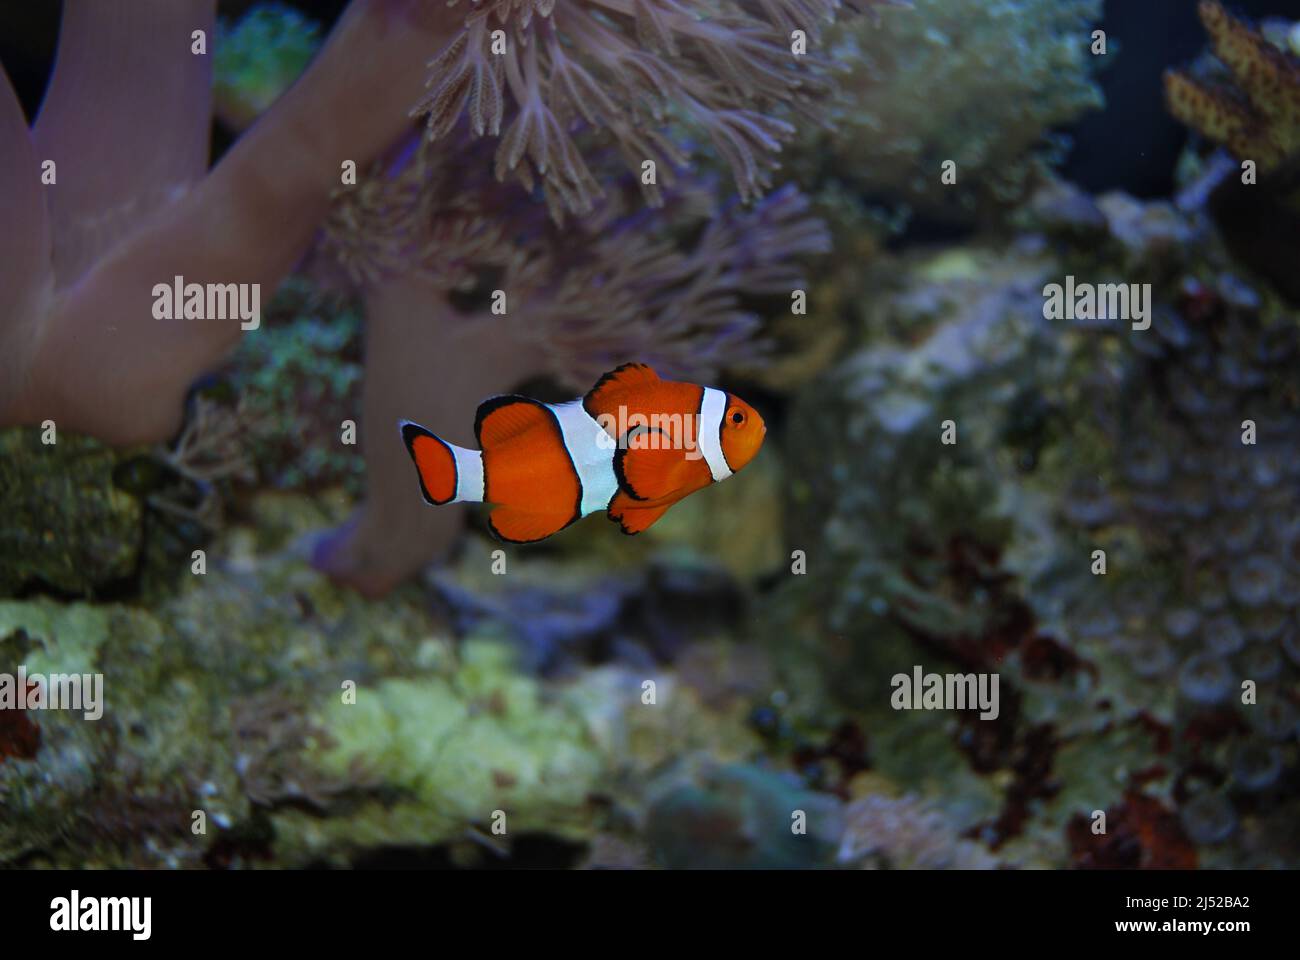 Clownfish in a saltwater reef aquarium Stock Photo